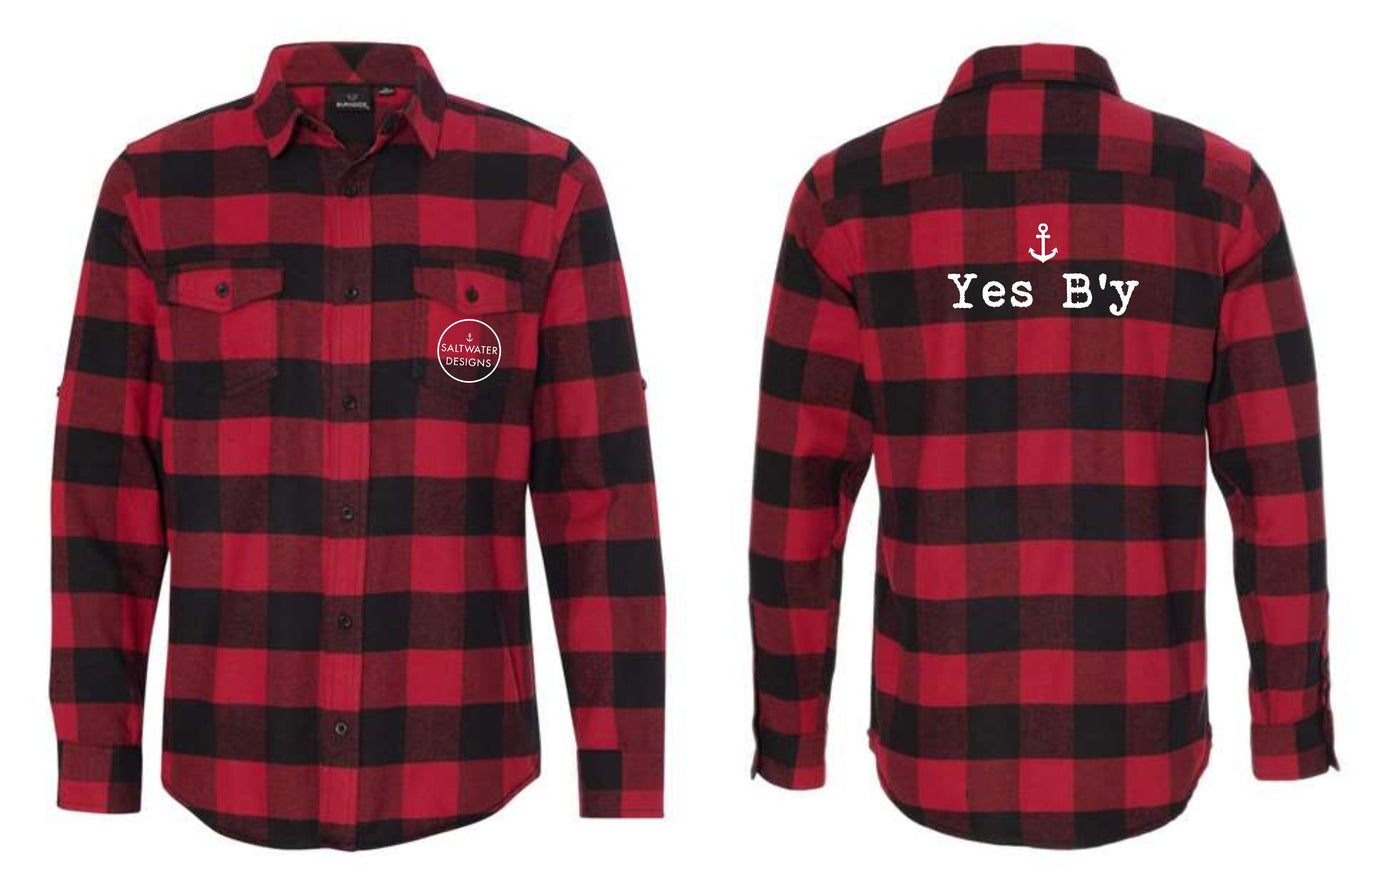 "Yes B'y" Unisex Plaid Flannel Shirt